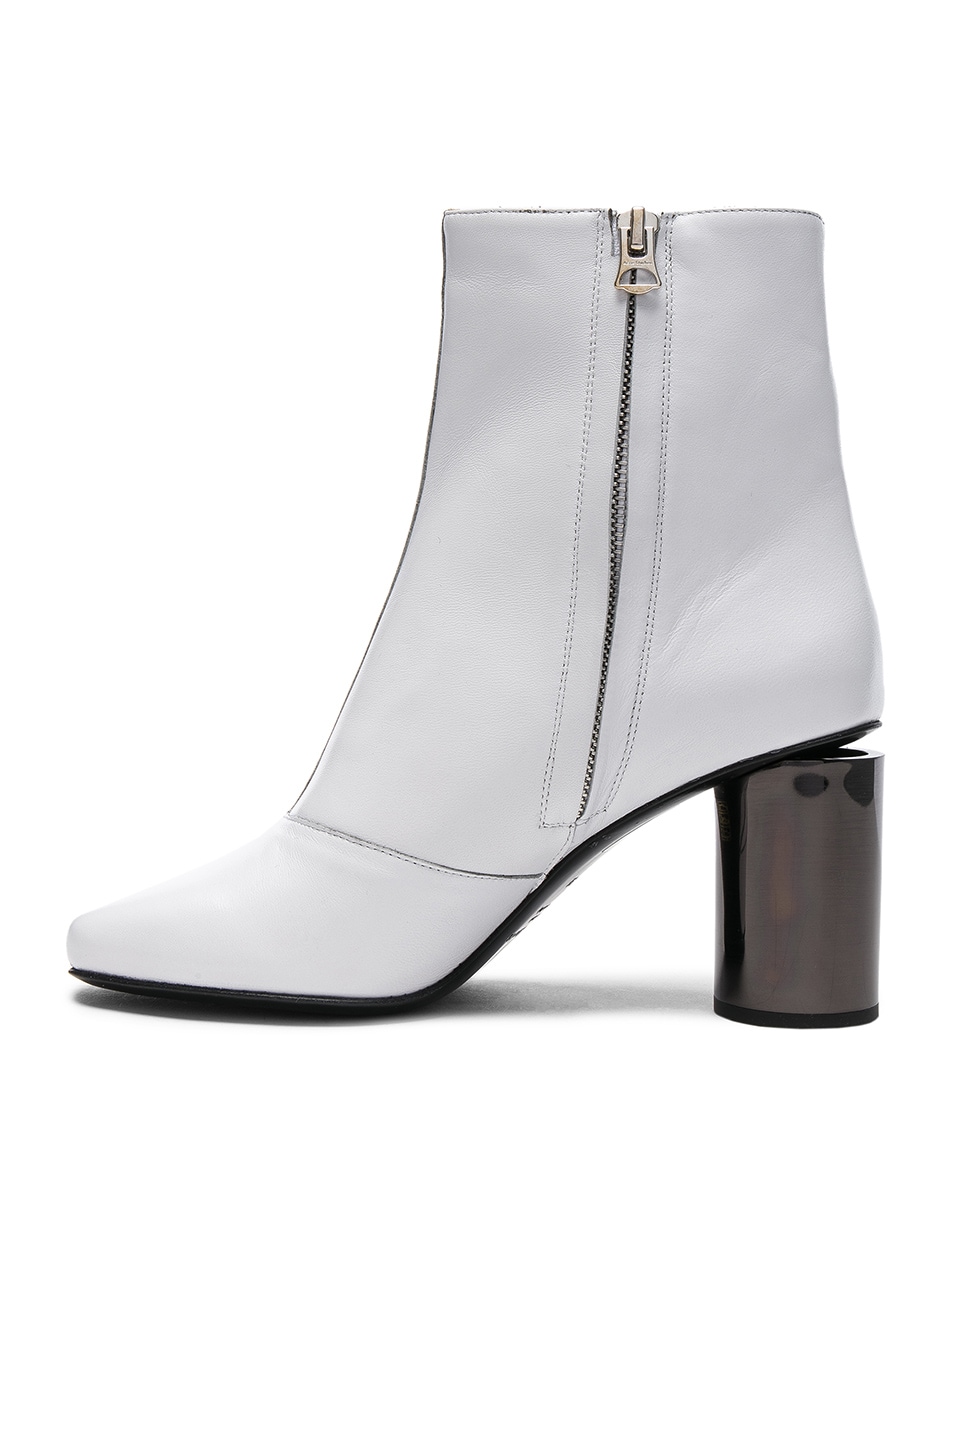 Acne Studios Leather Allis Boots in White & Black | FWRD